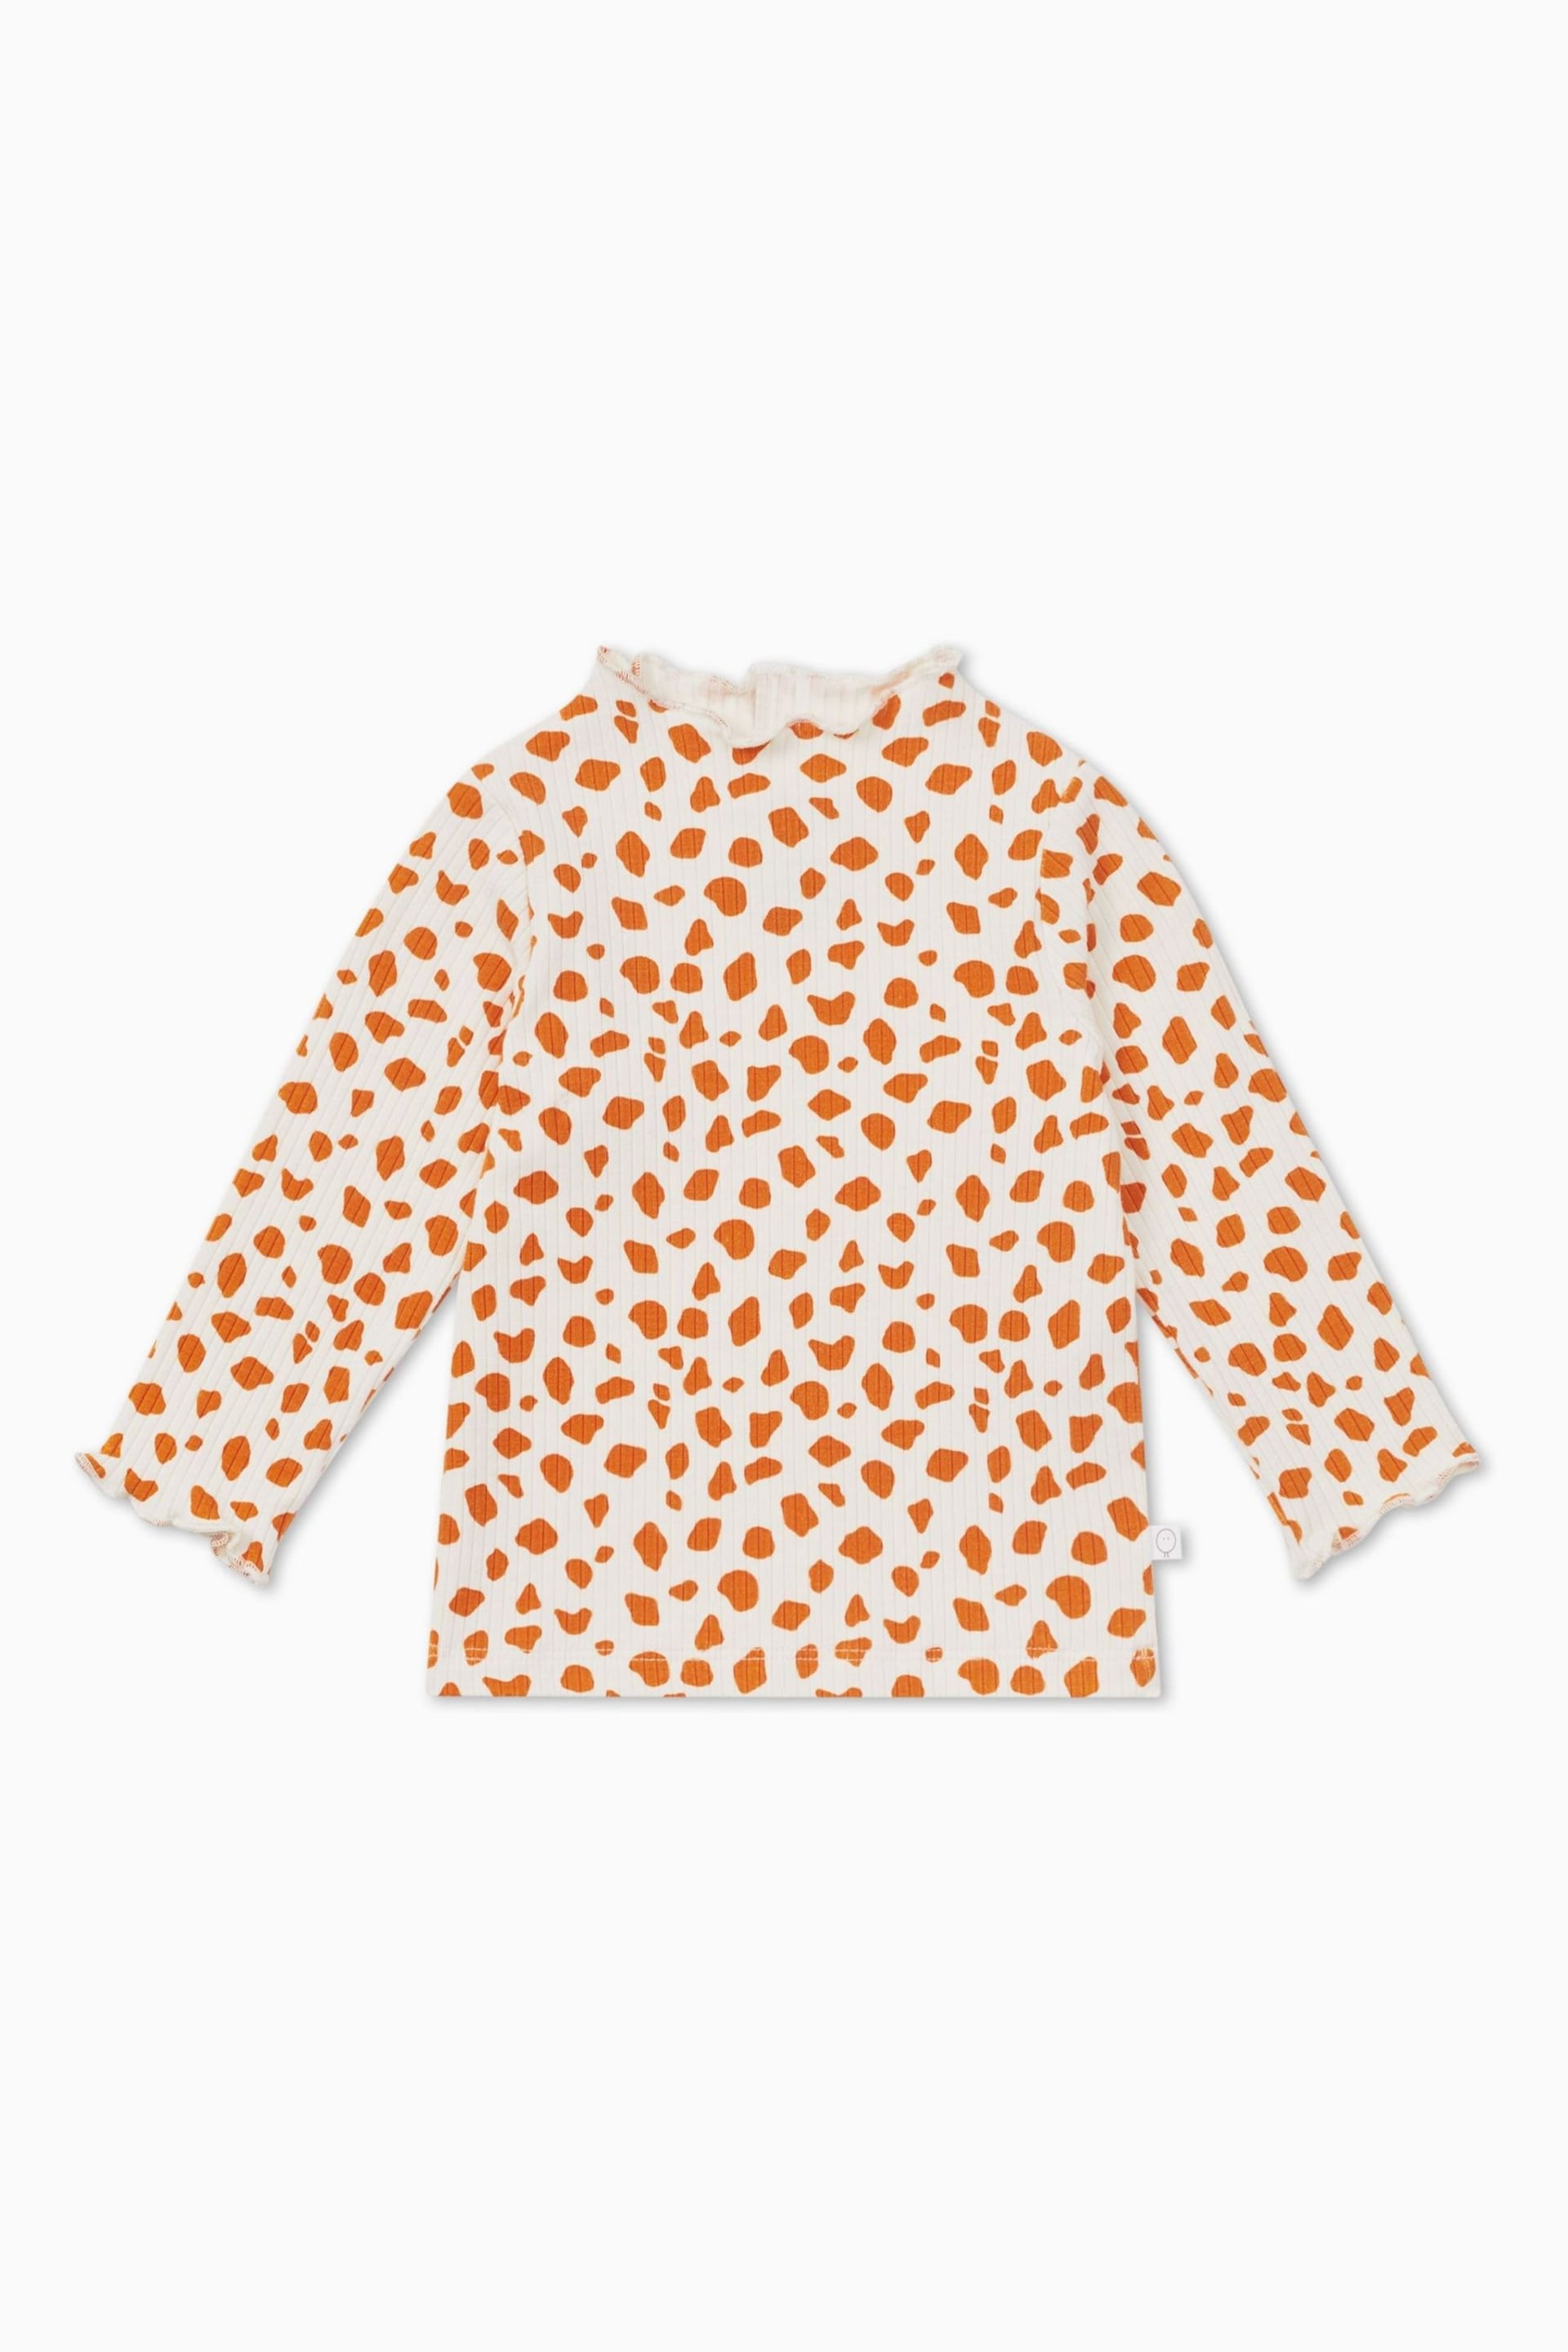 MORI Cream Organic Cotton & Bamboo Giraffe Spot Frill T-Shirt - Image 1 of 2